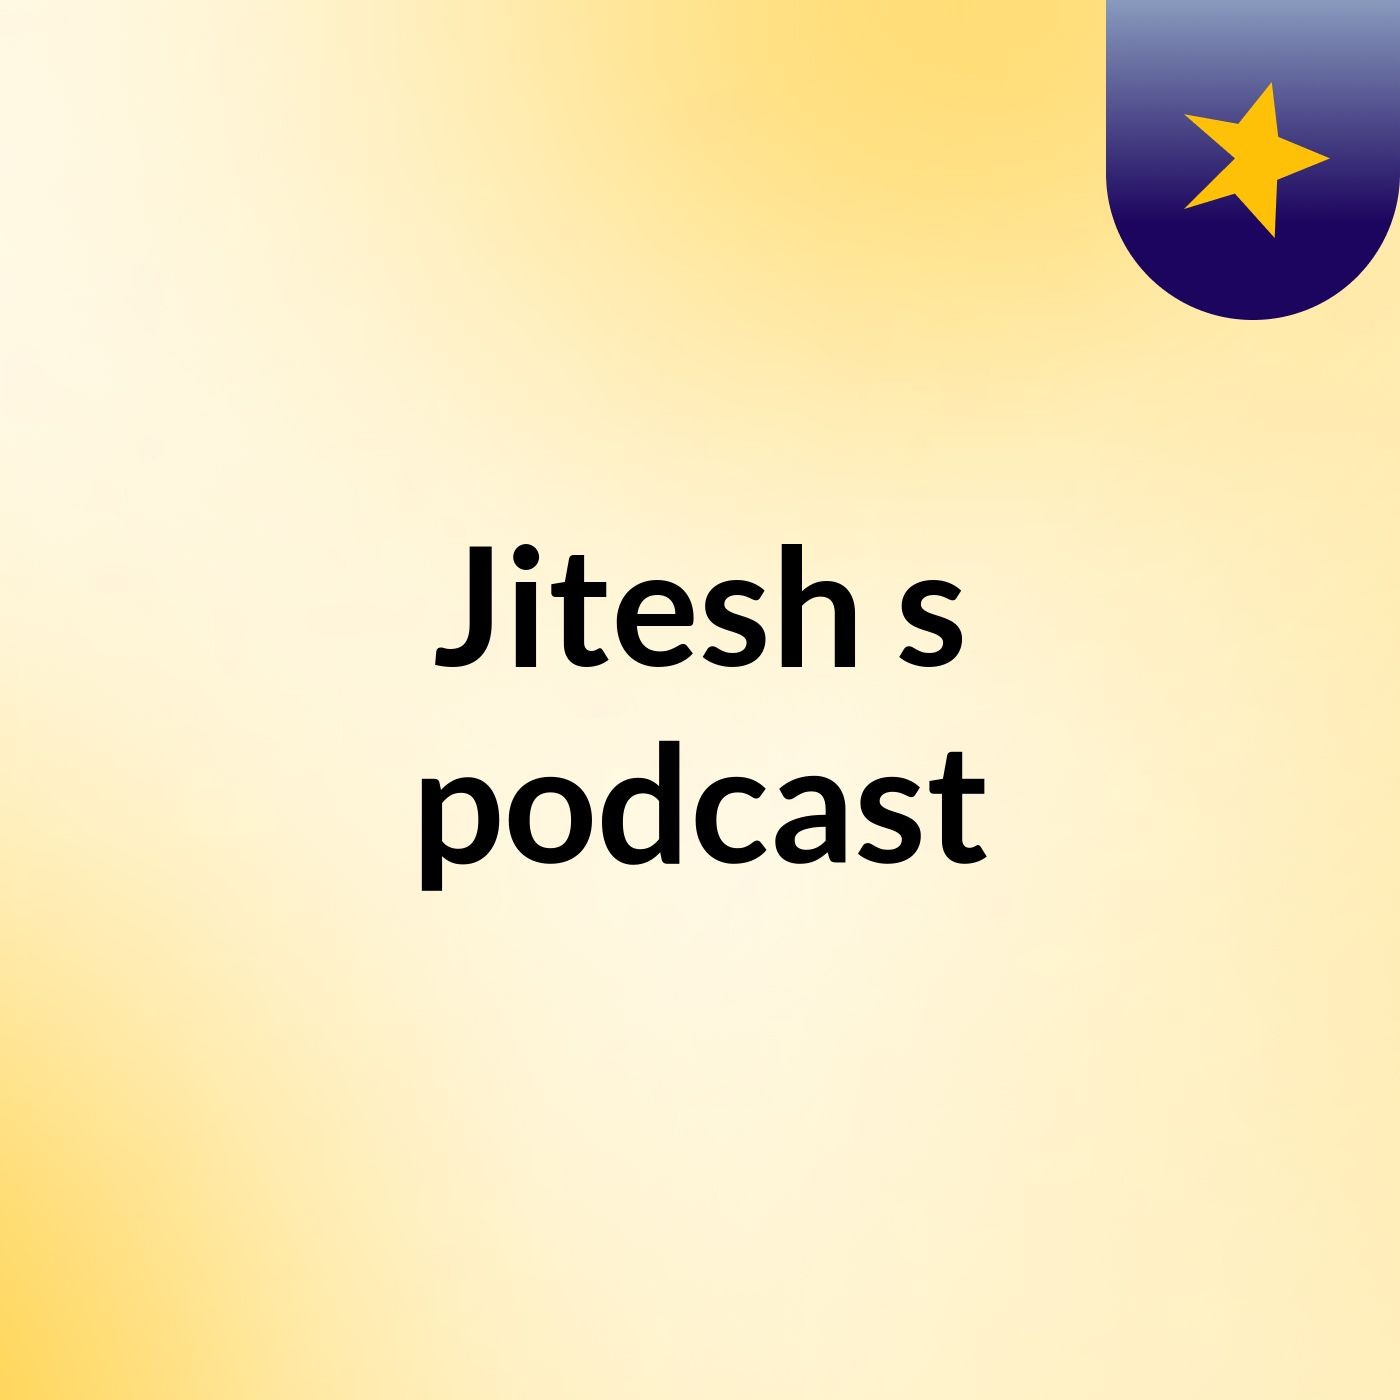 Jitesh's podcast